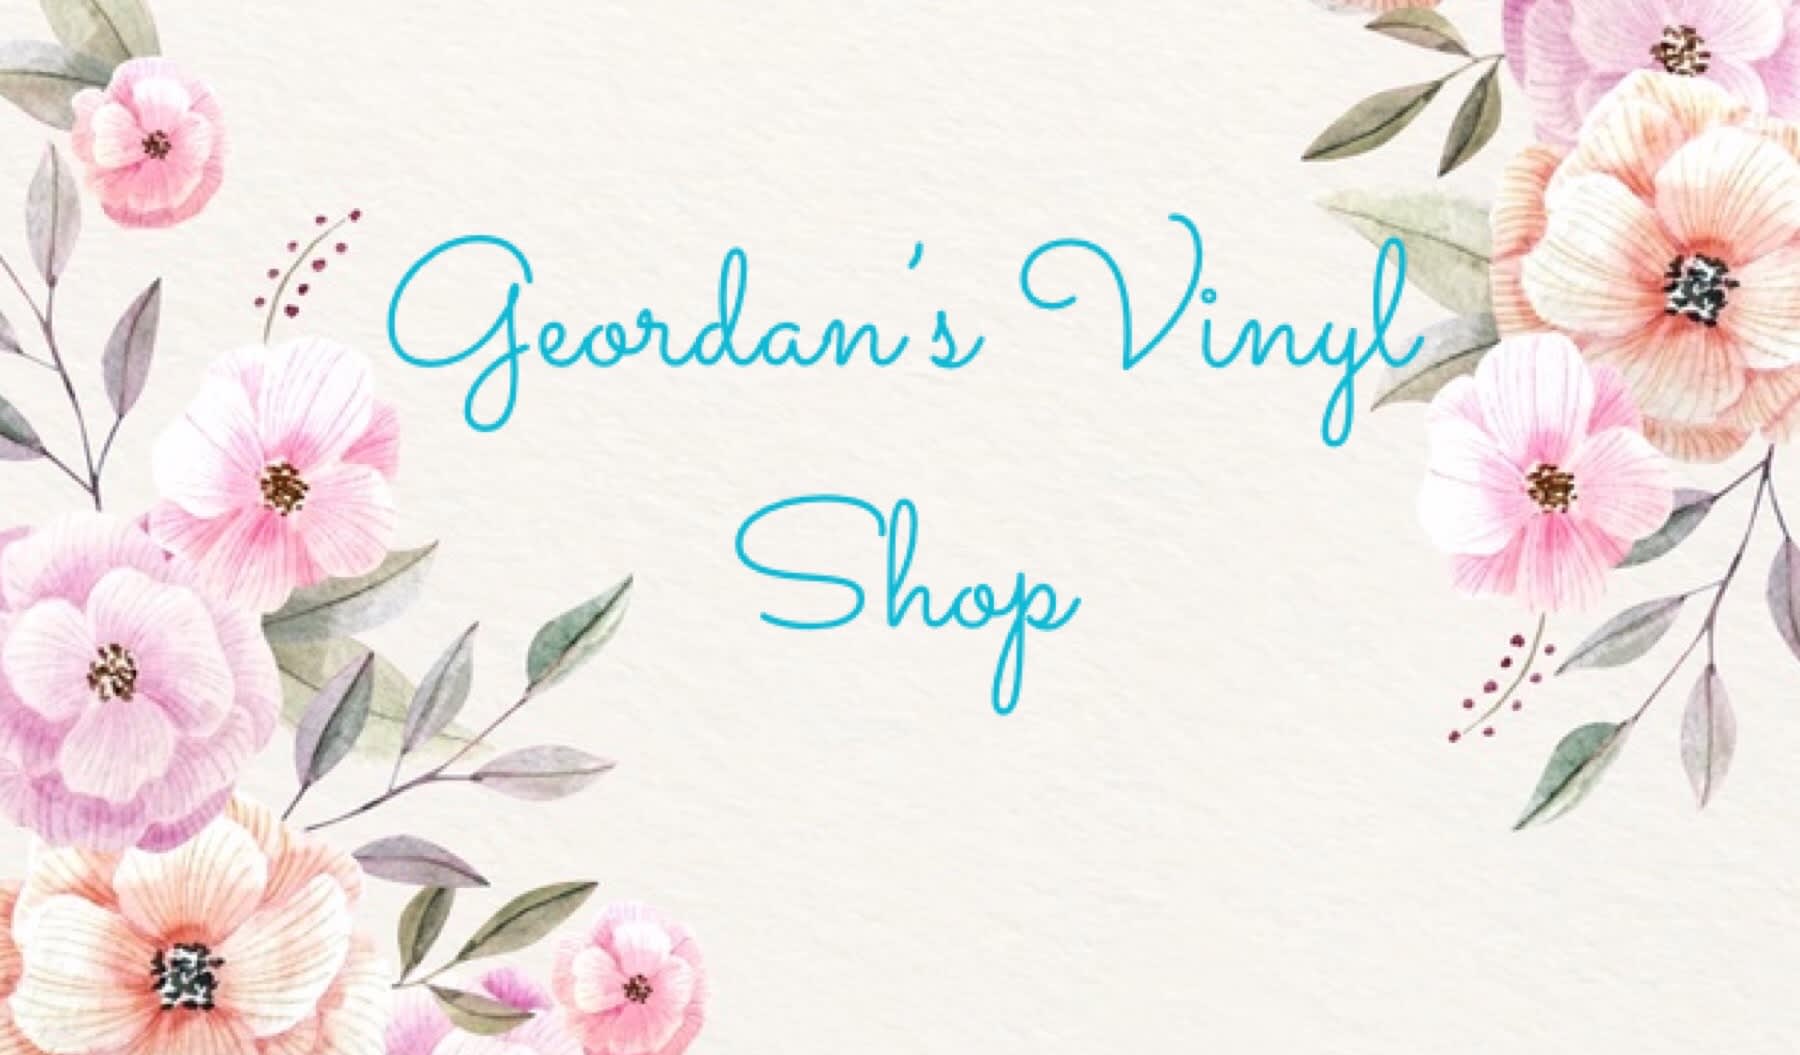 Geordan's Vinyl Shop